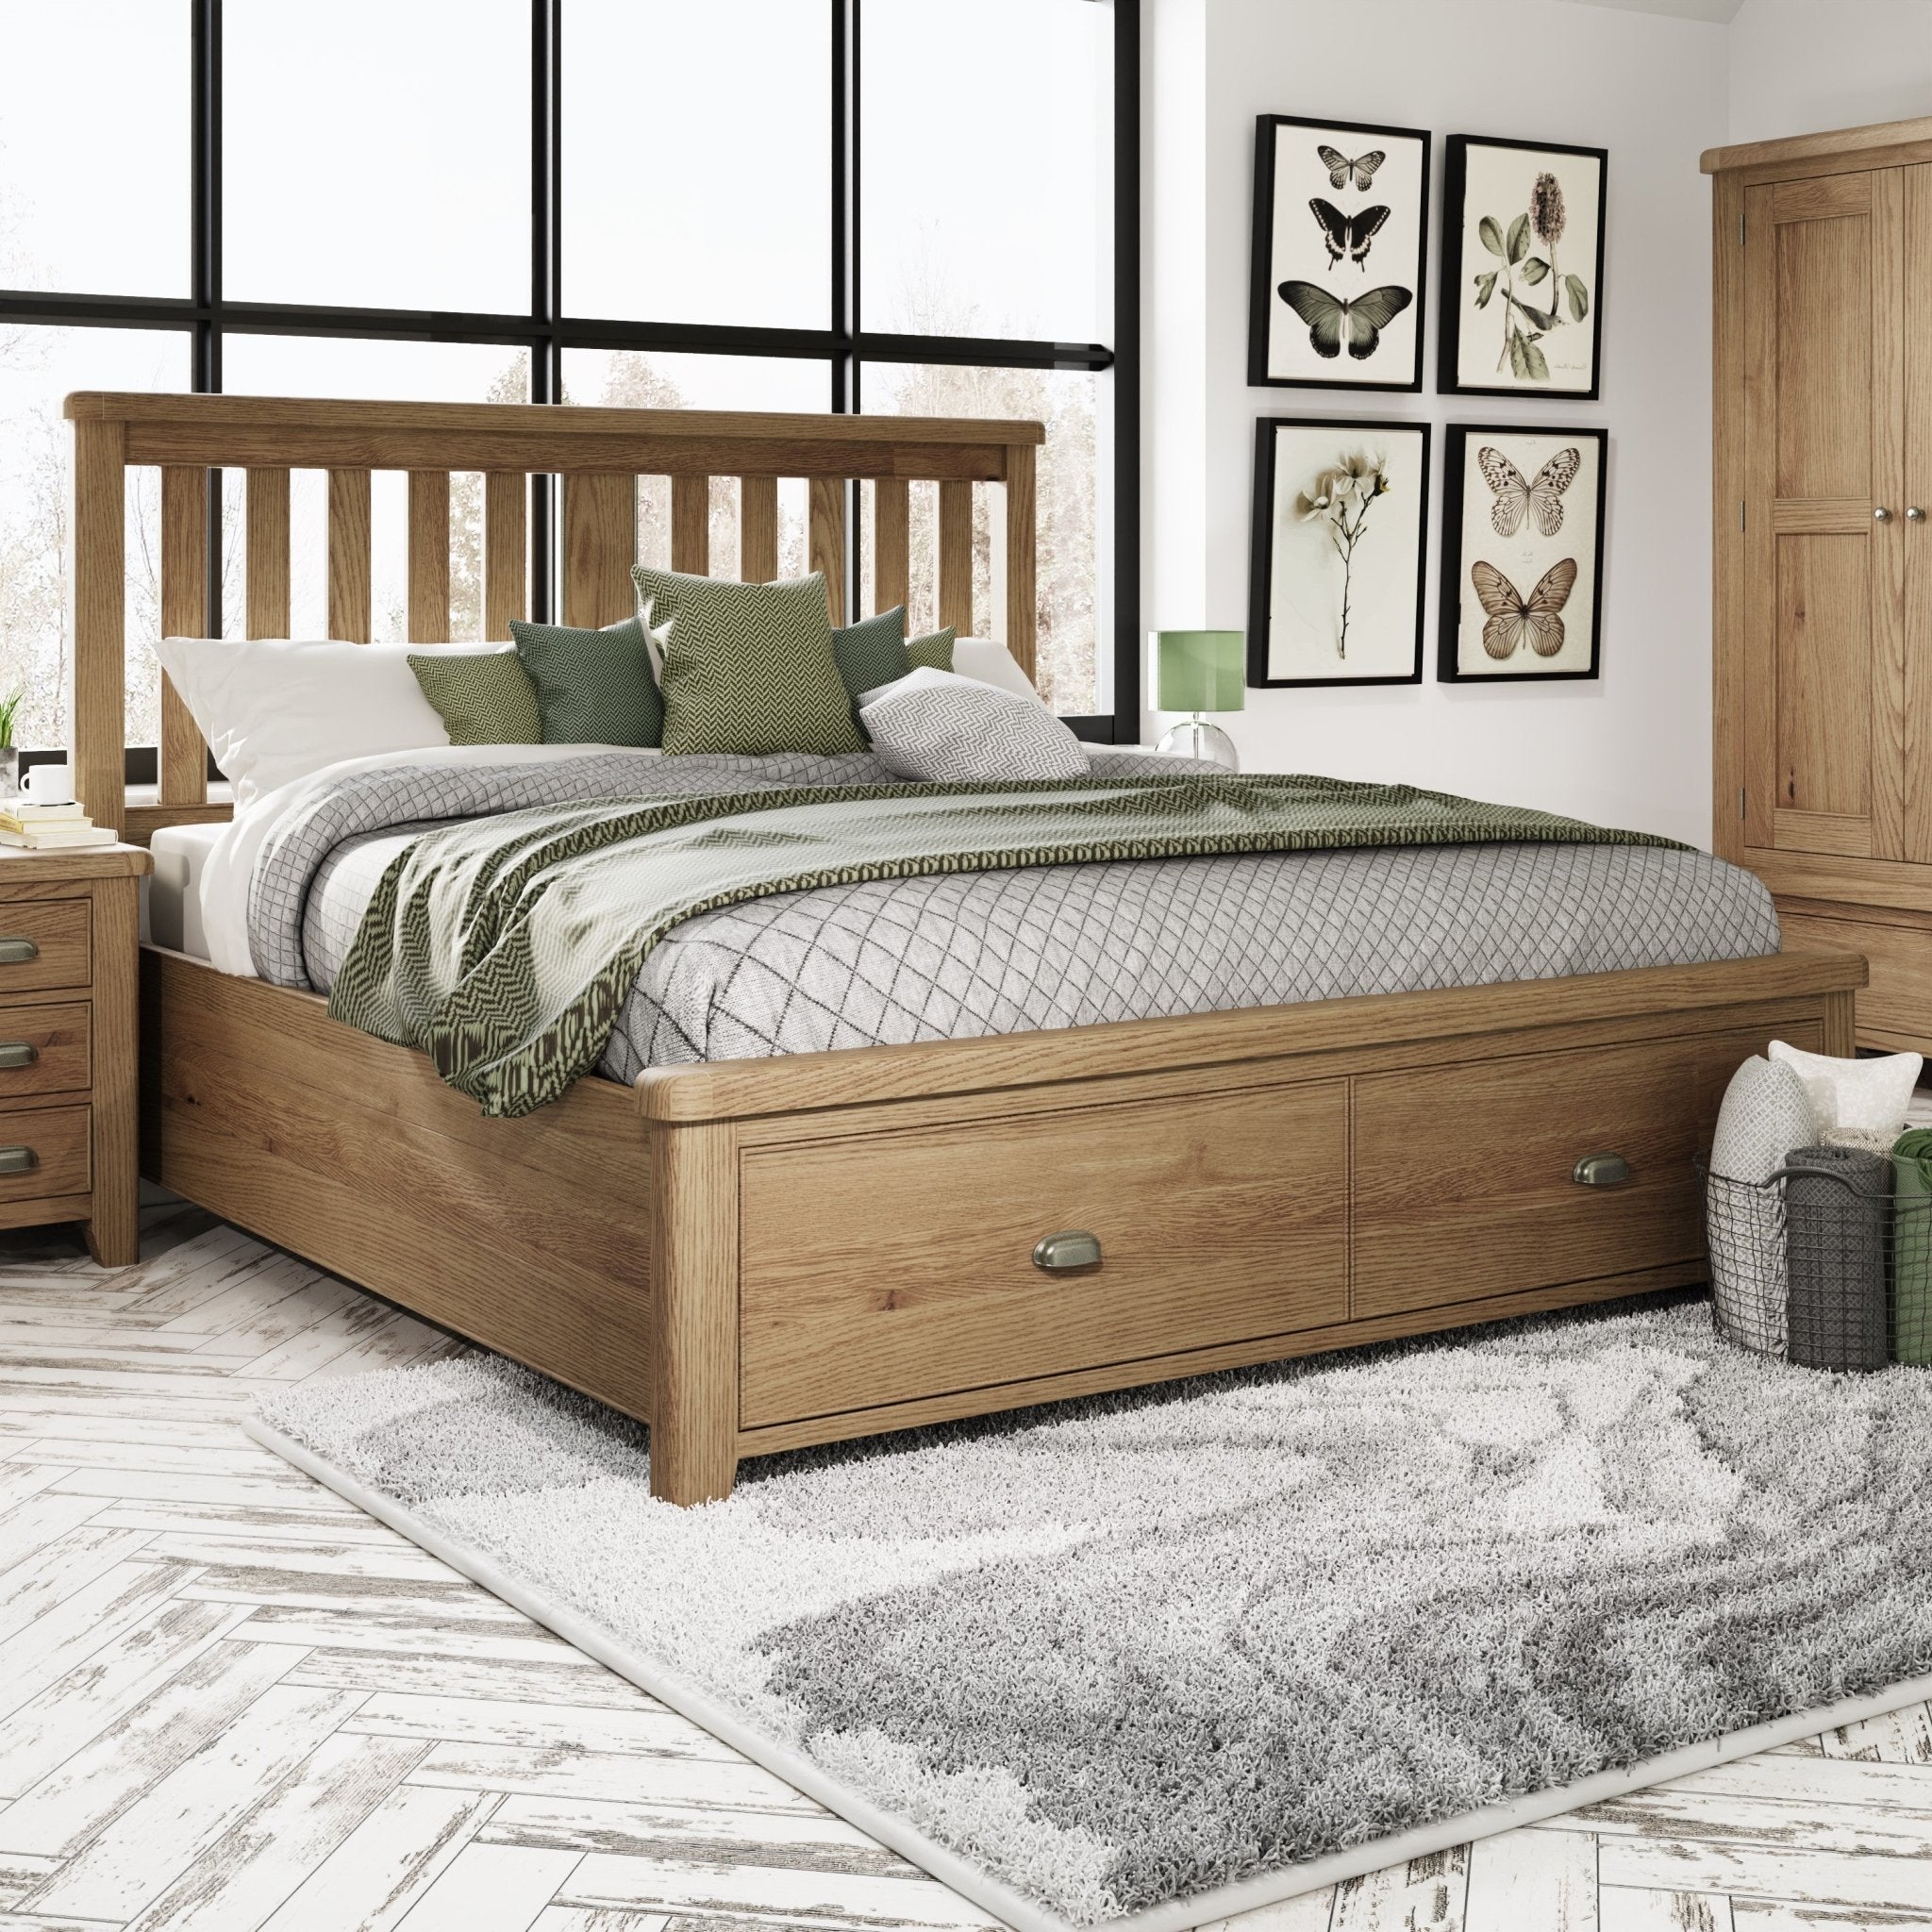 Rusper Oak 6'0 Super King Bed Frame - Wooden Headboard & Drawers - Duck Barn Interiors